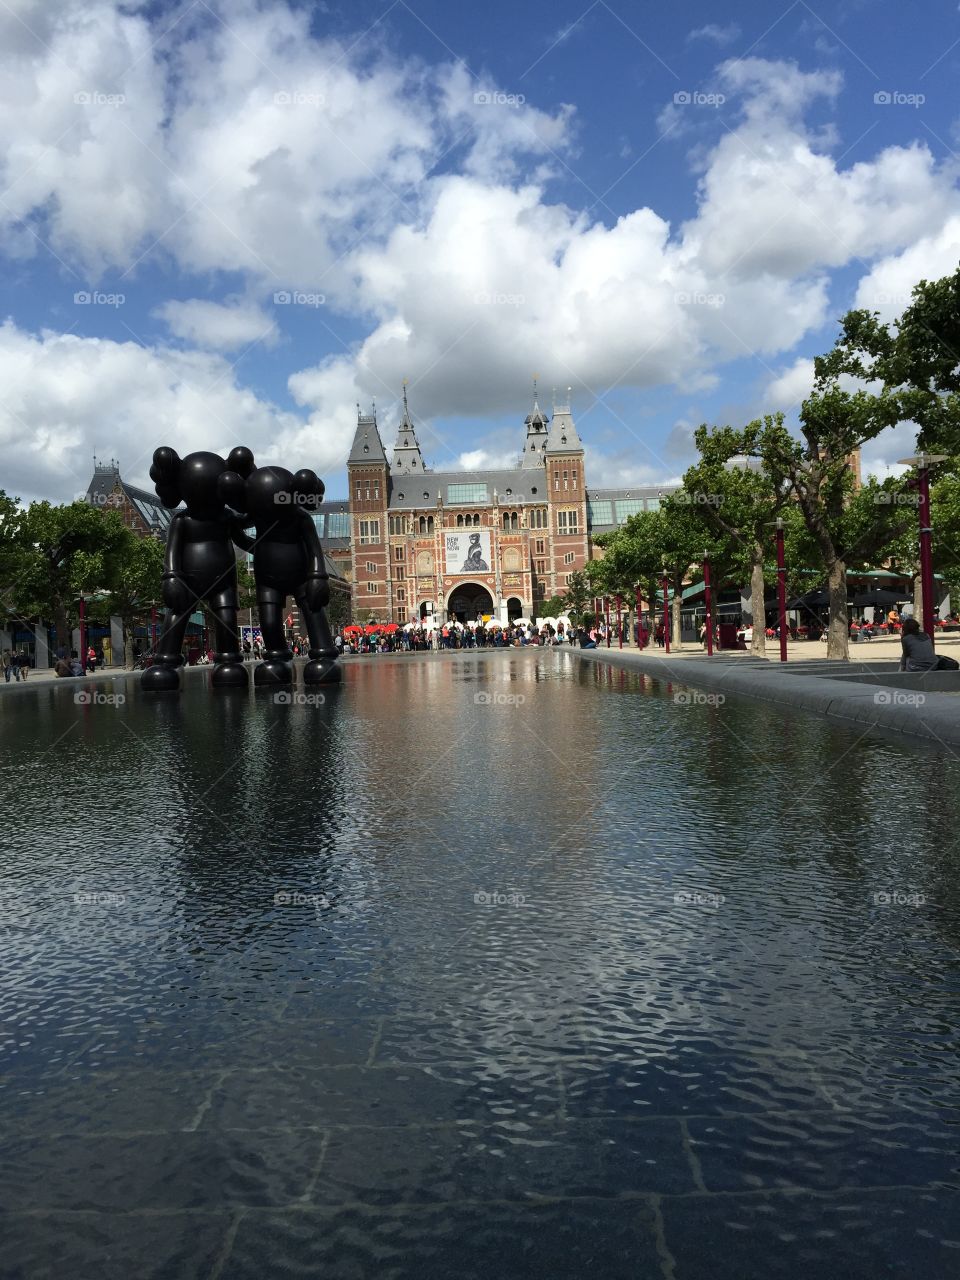 Rijksmuseum Reflecting Pool. Taken at the Rijksmuseum in Amsterdam, The Netherlands. 